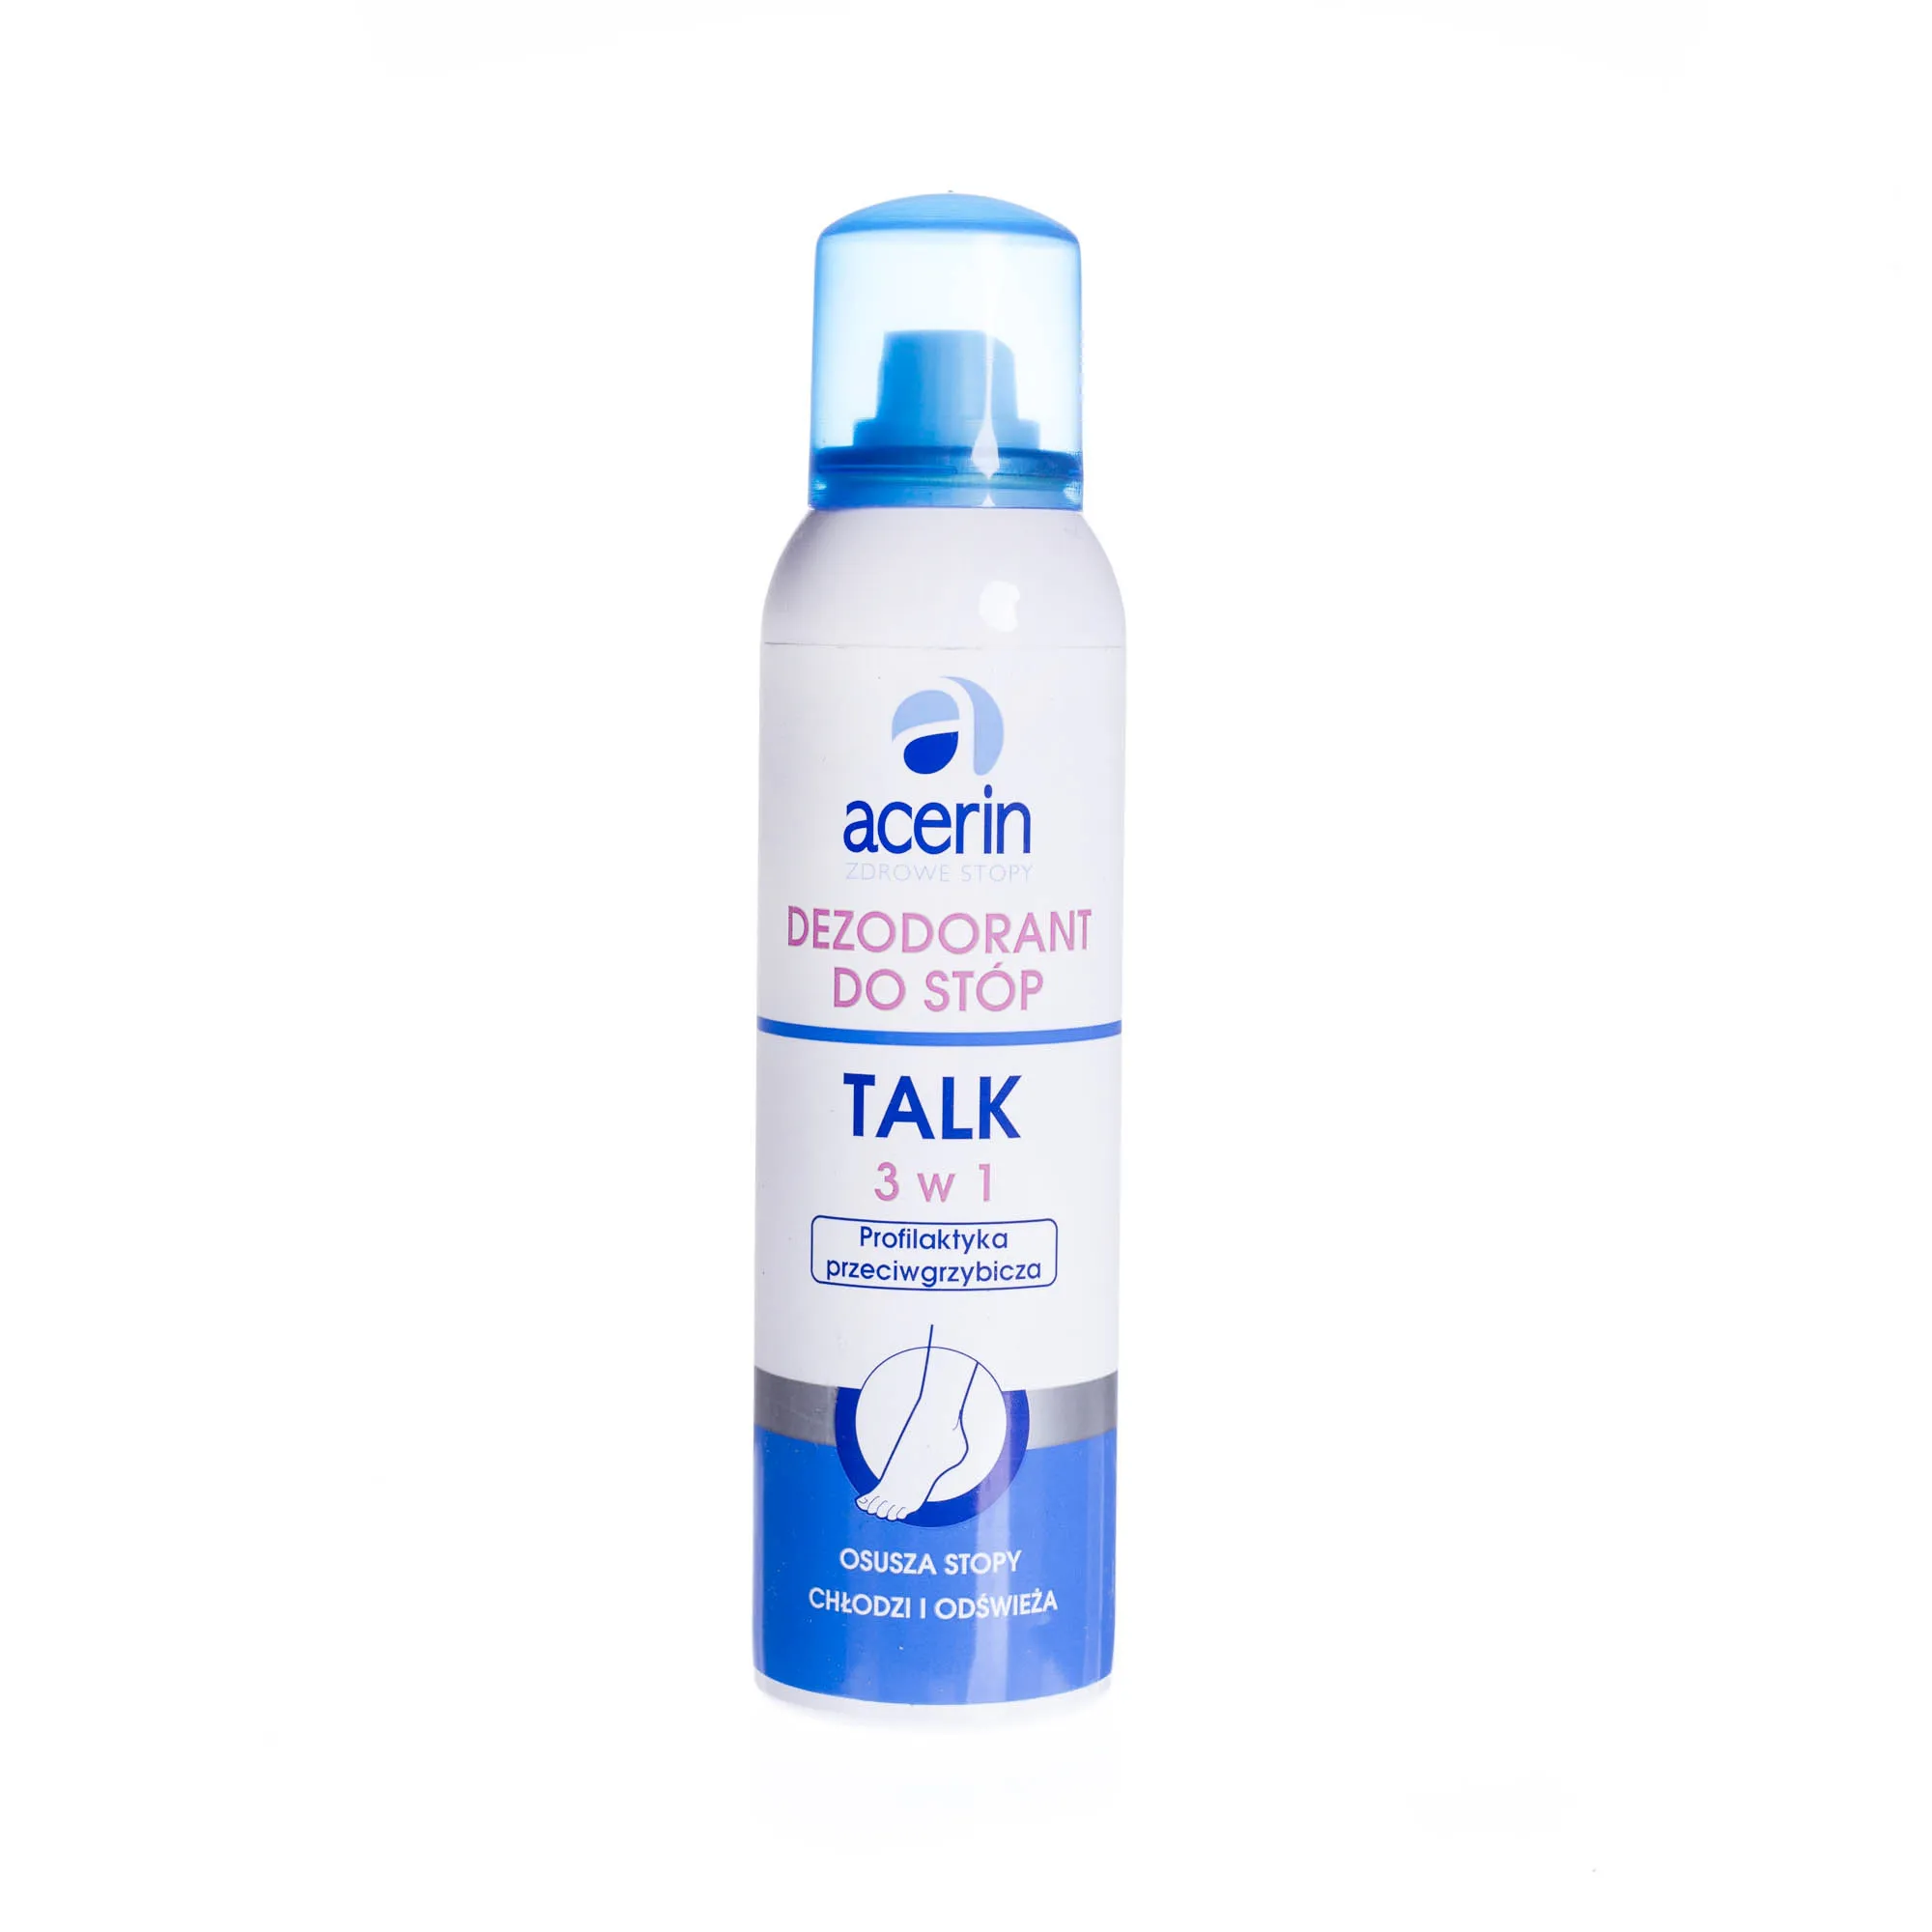 Acerin Dezodorant do stóp, Talk 3w1, 150 ml